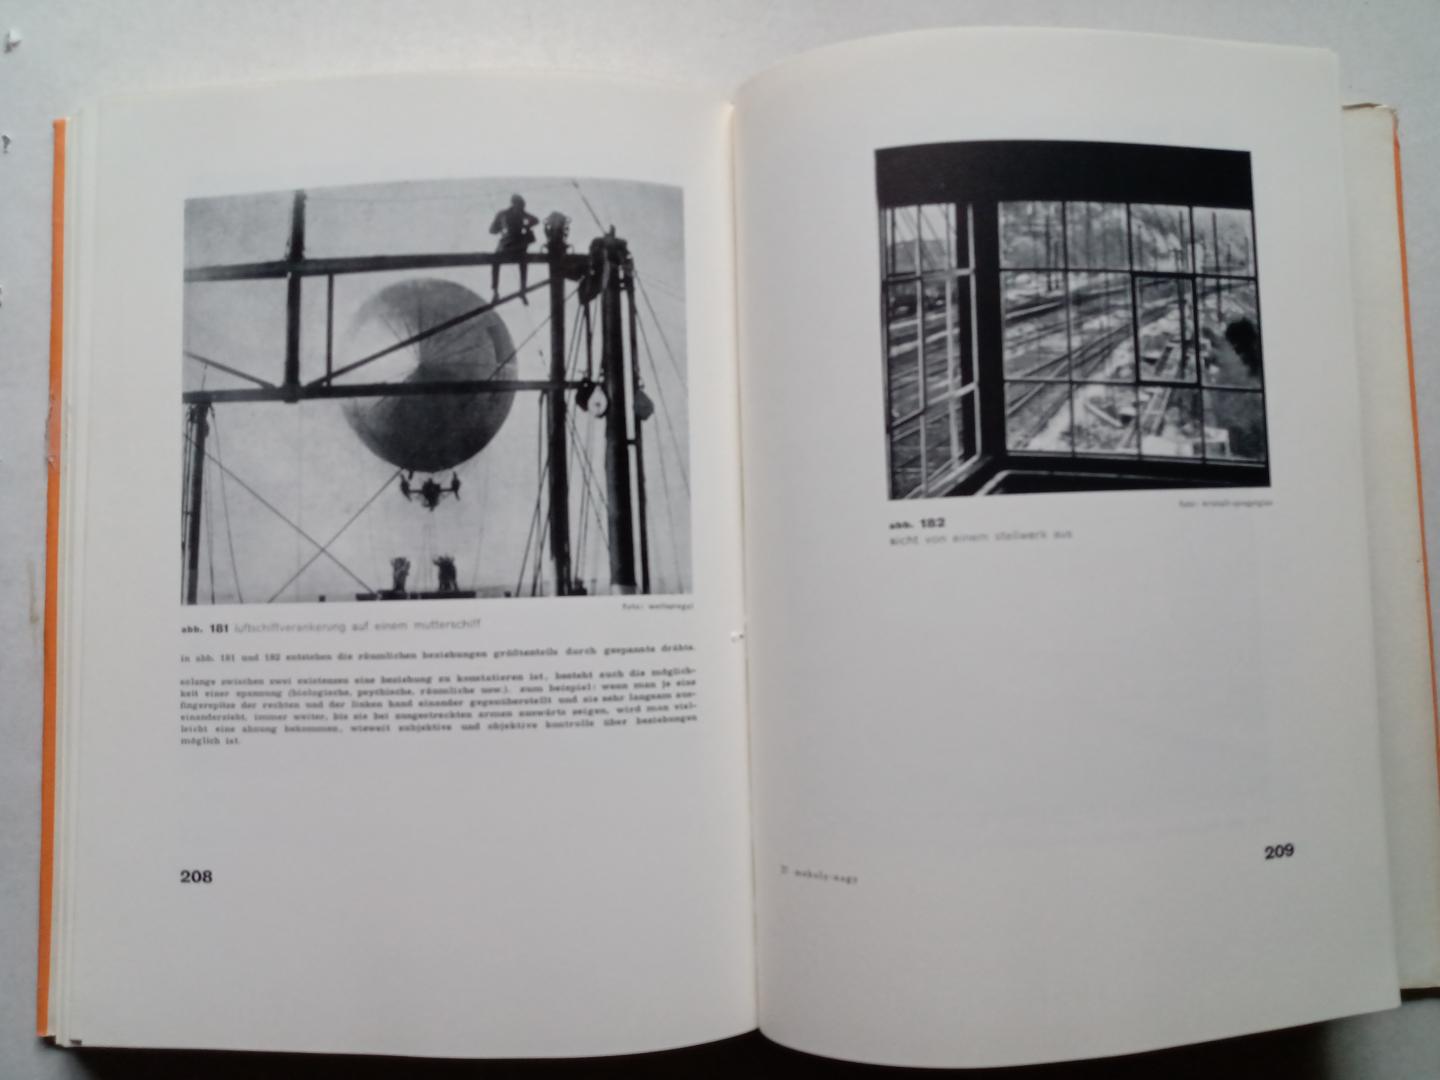 L. Moholy-Nagy - Moholy-Nagy Von Material zu Architektur - Bauhausbücher 14